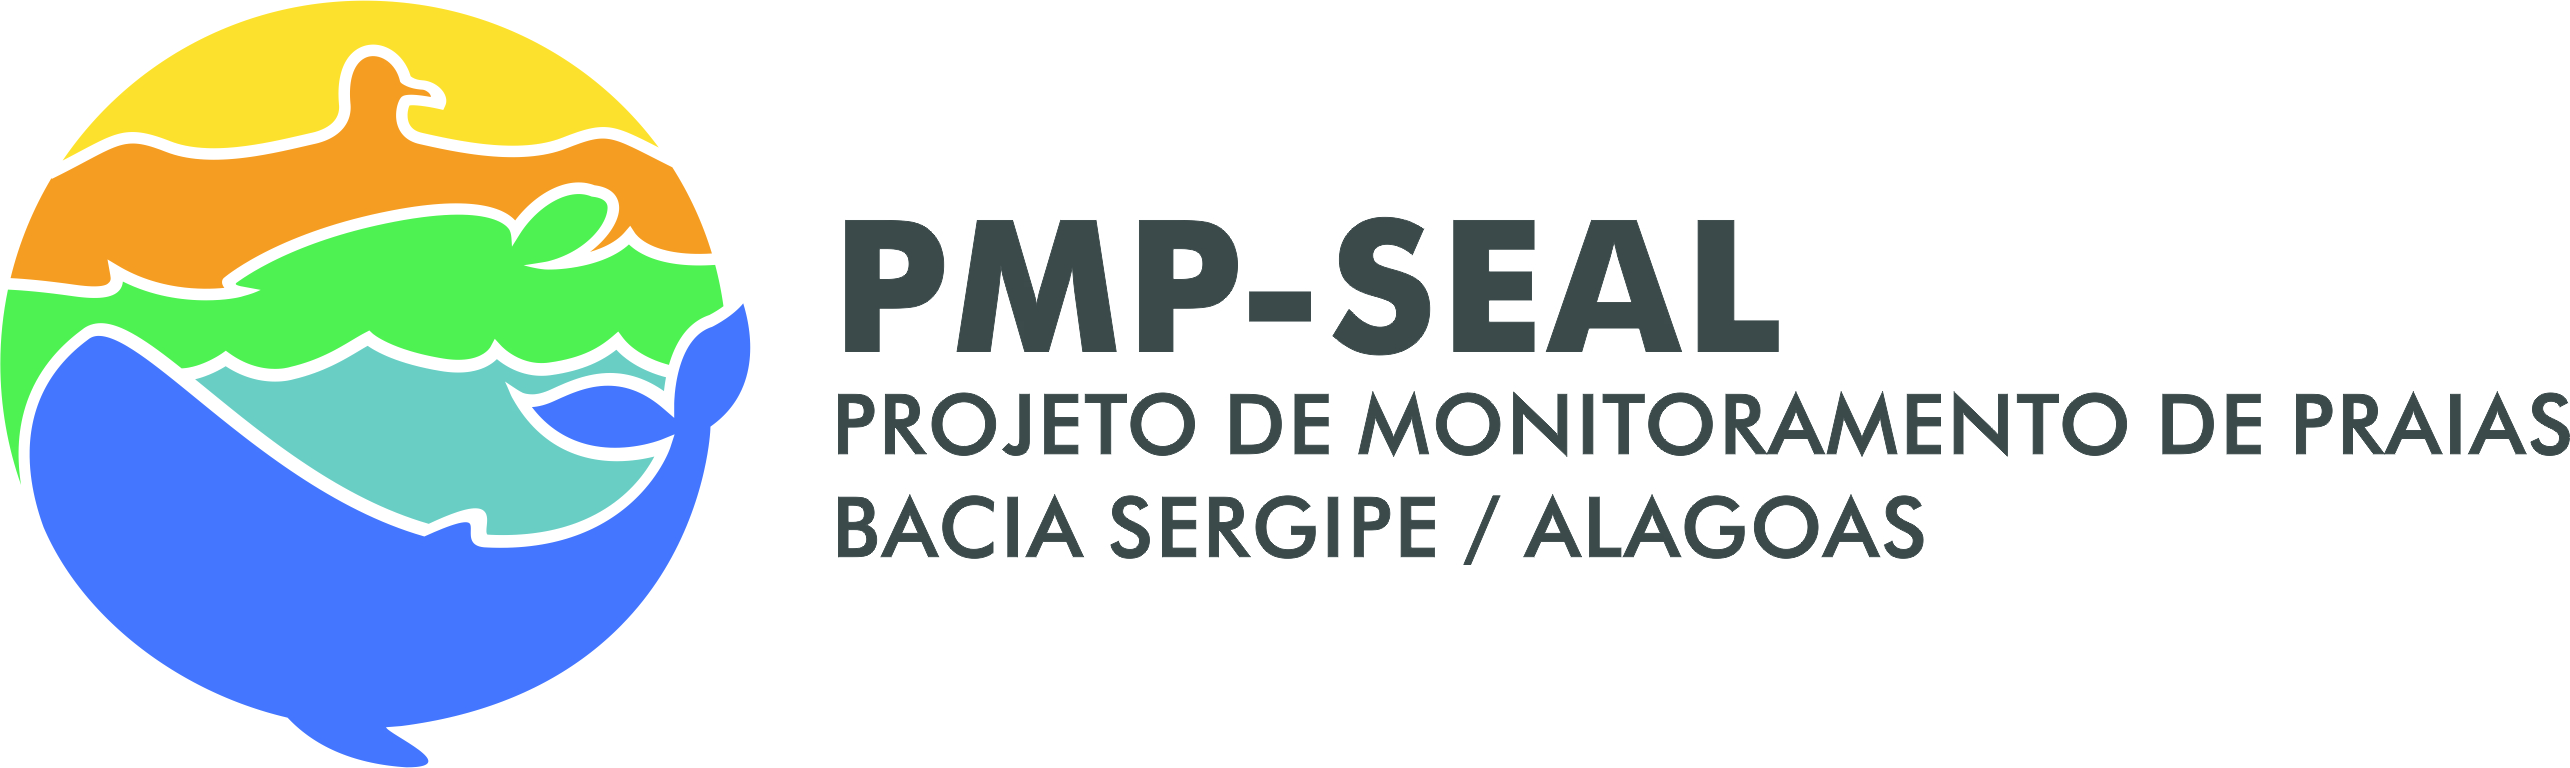 PMP-SE/AL - Programa de Monitoramento de Praias da Bacia de Sergipe-Alagoas